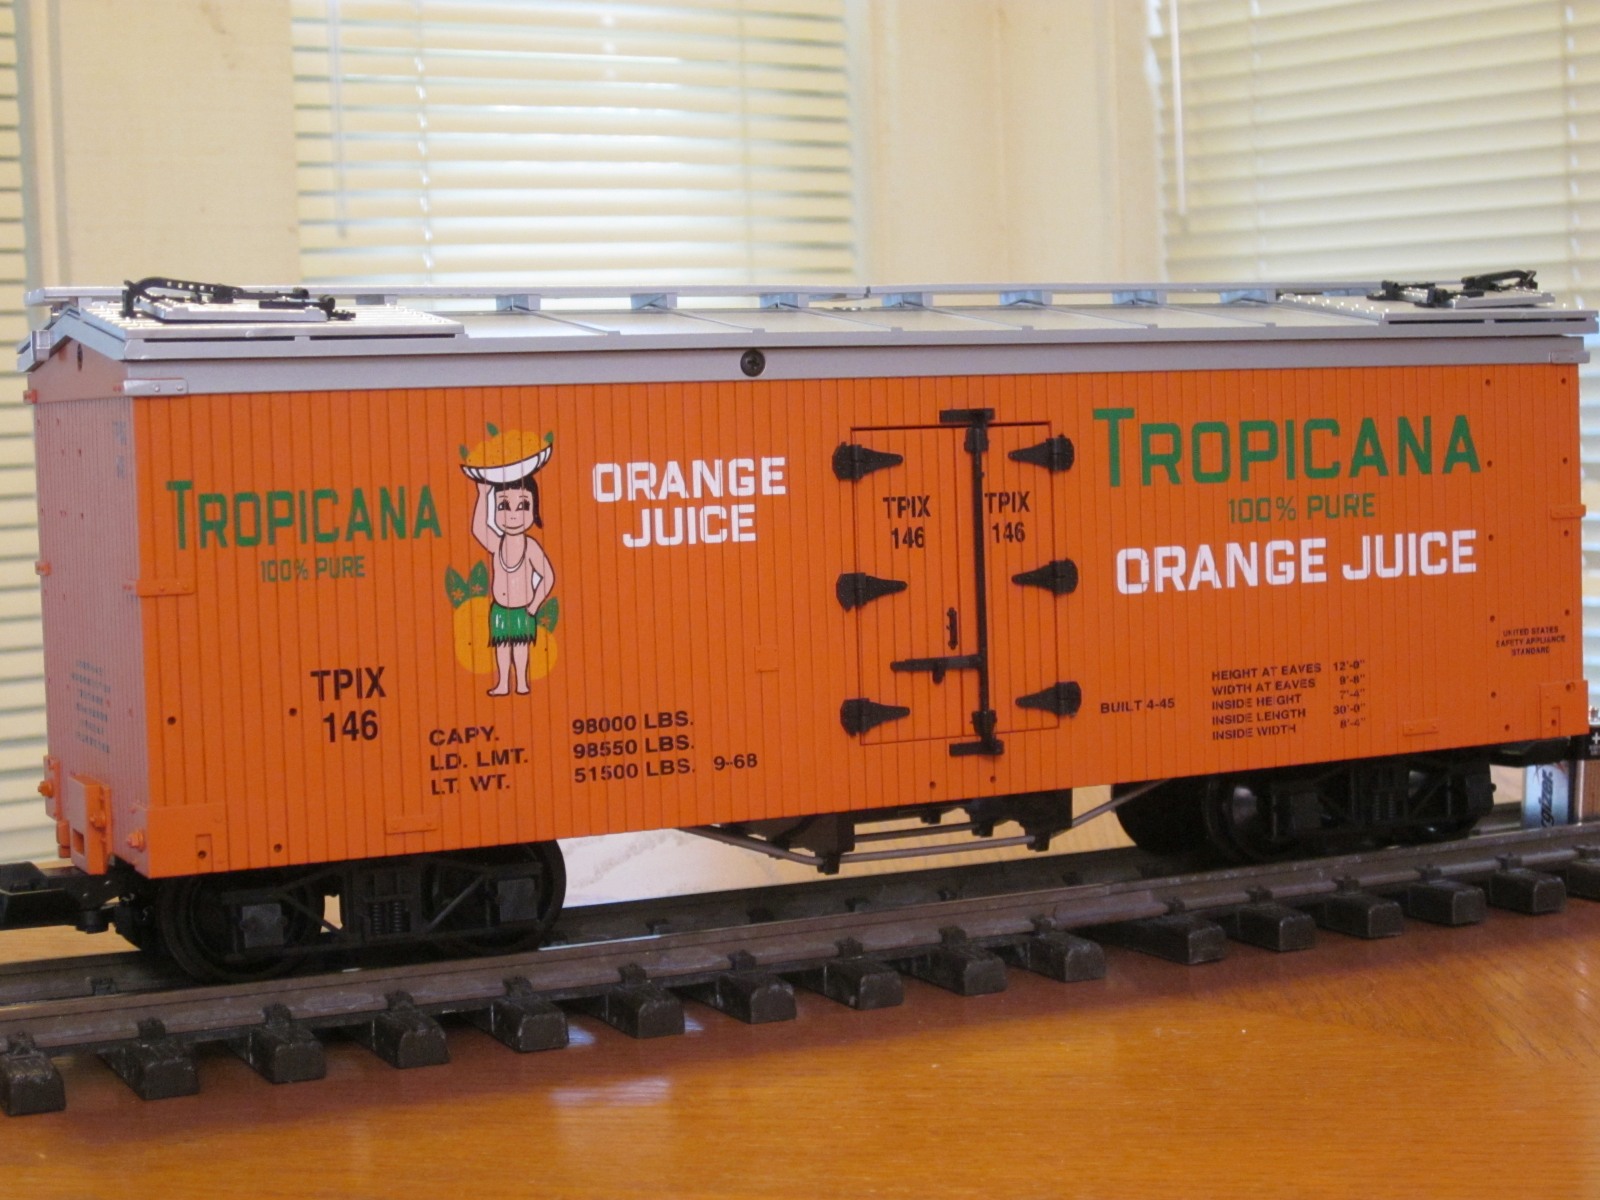 R16151A Tropicana Orange Juice TPIX 146